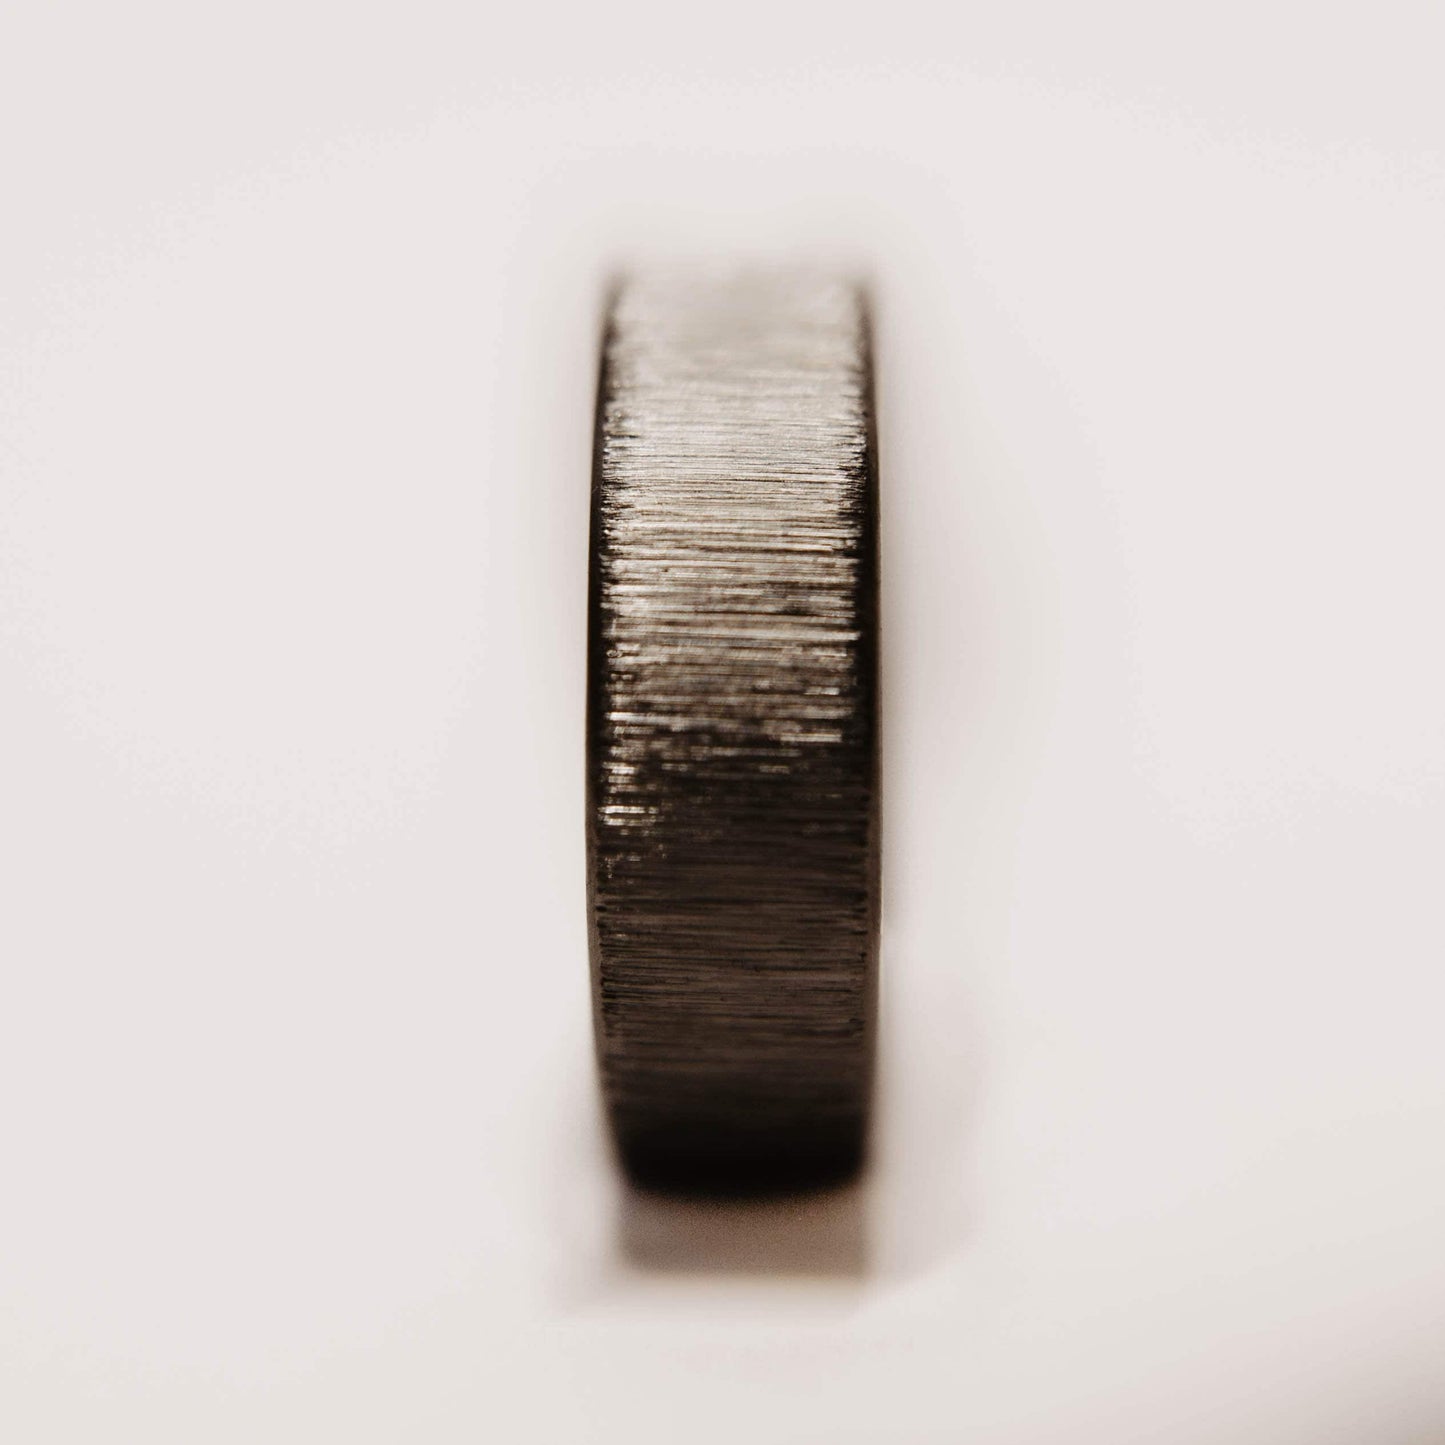 Vertical Grain Titanium wedding band. This photo shows a vertical grain gray titanium ring. (Vertical with white background)